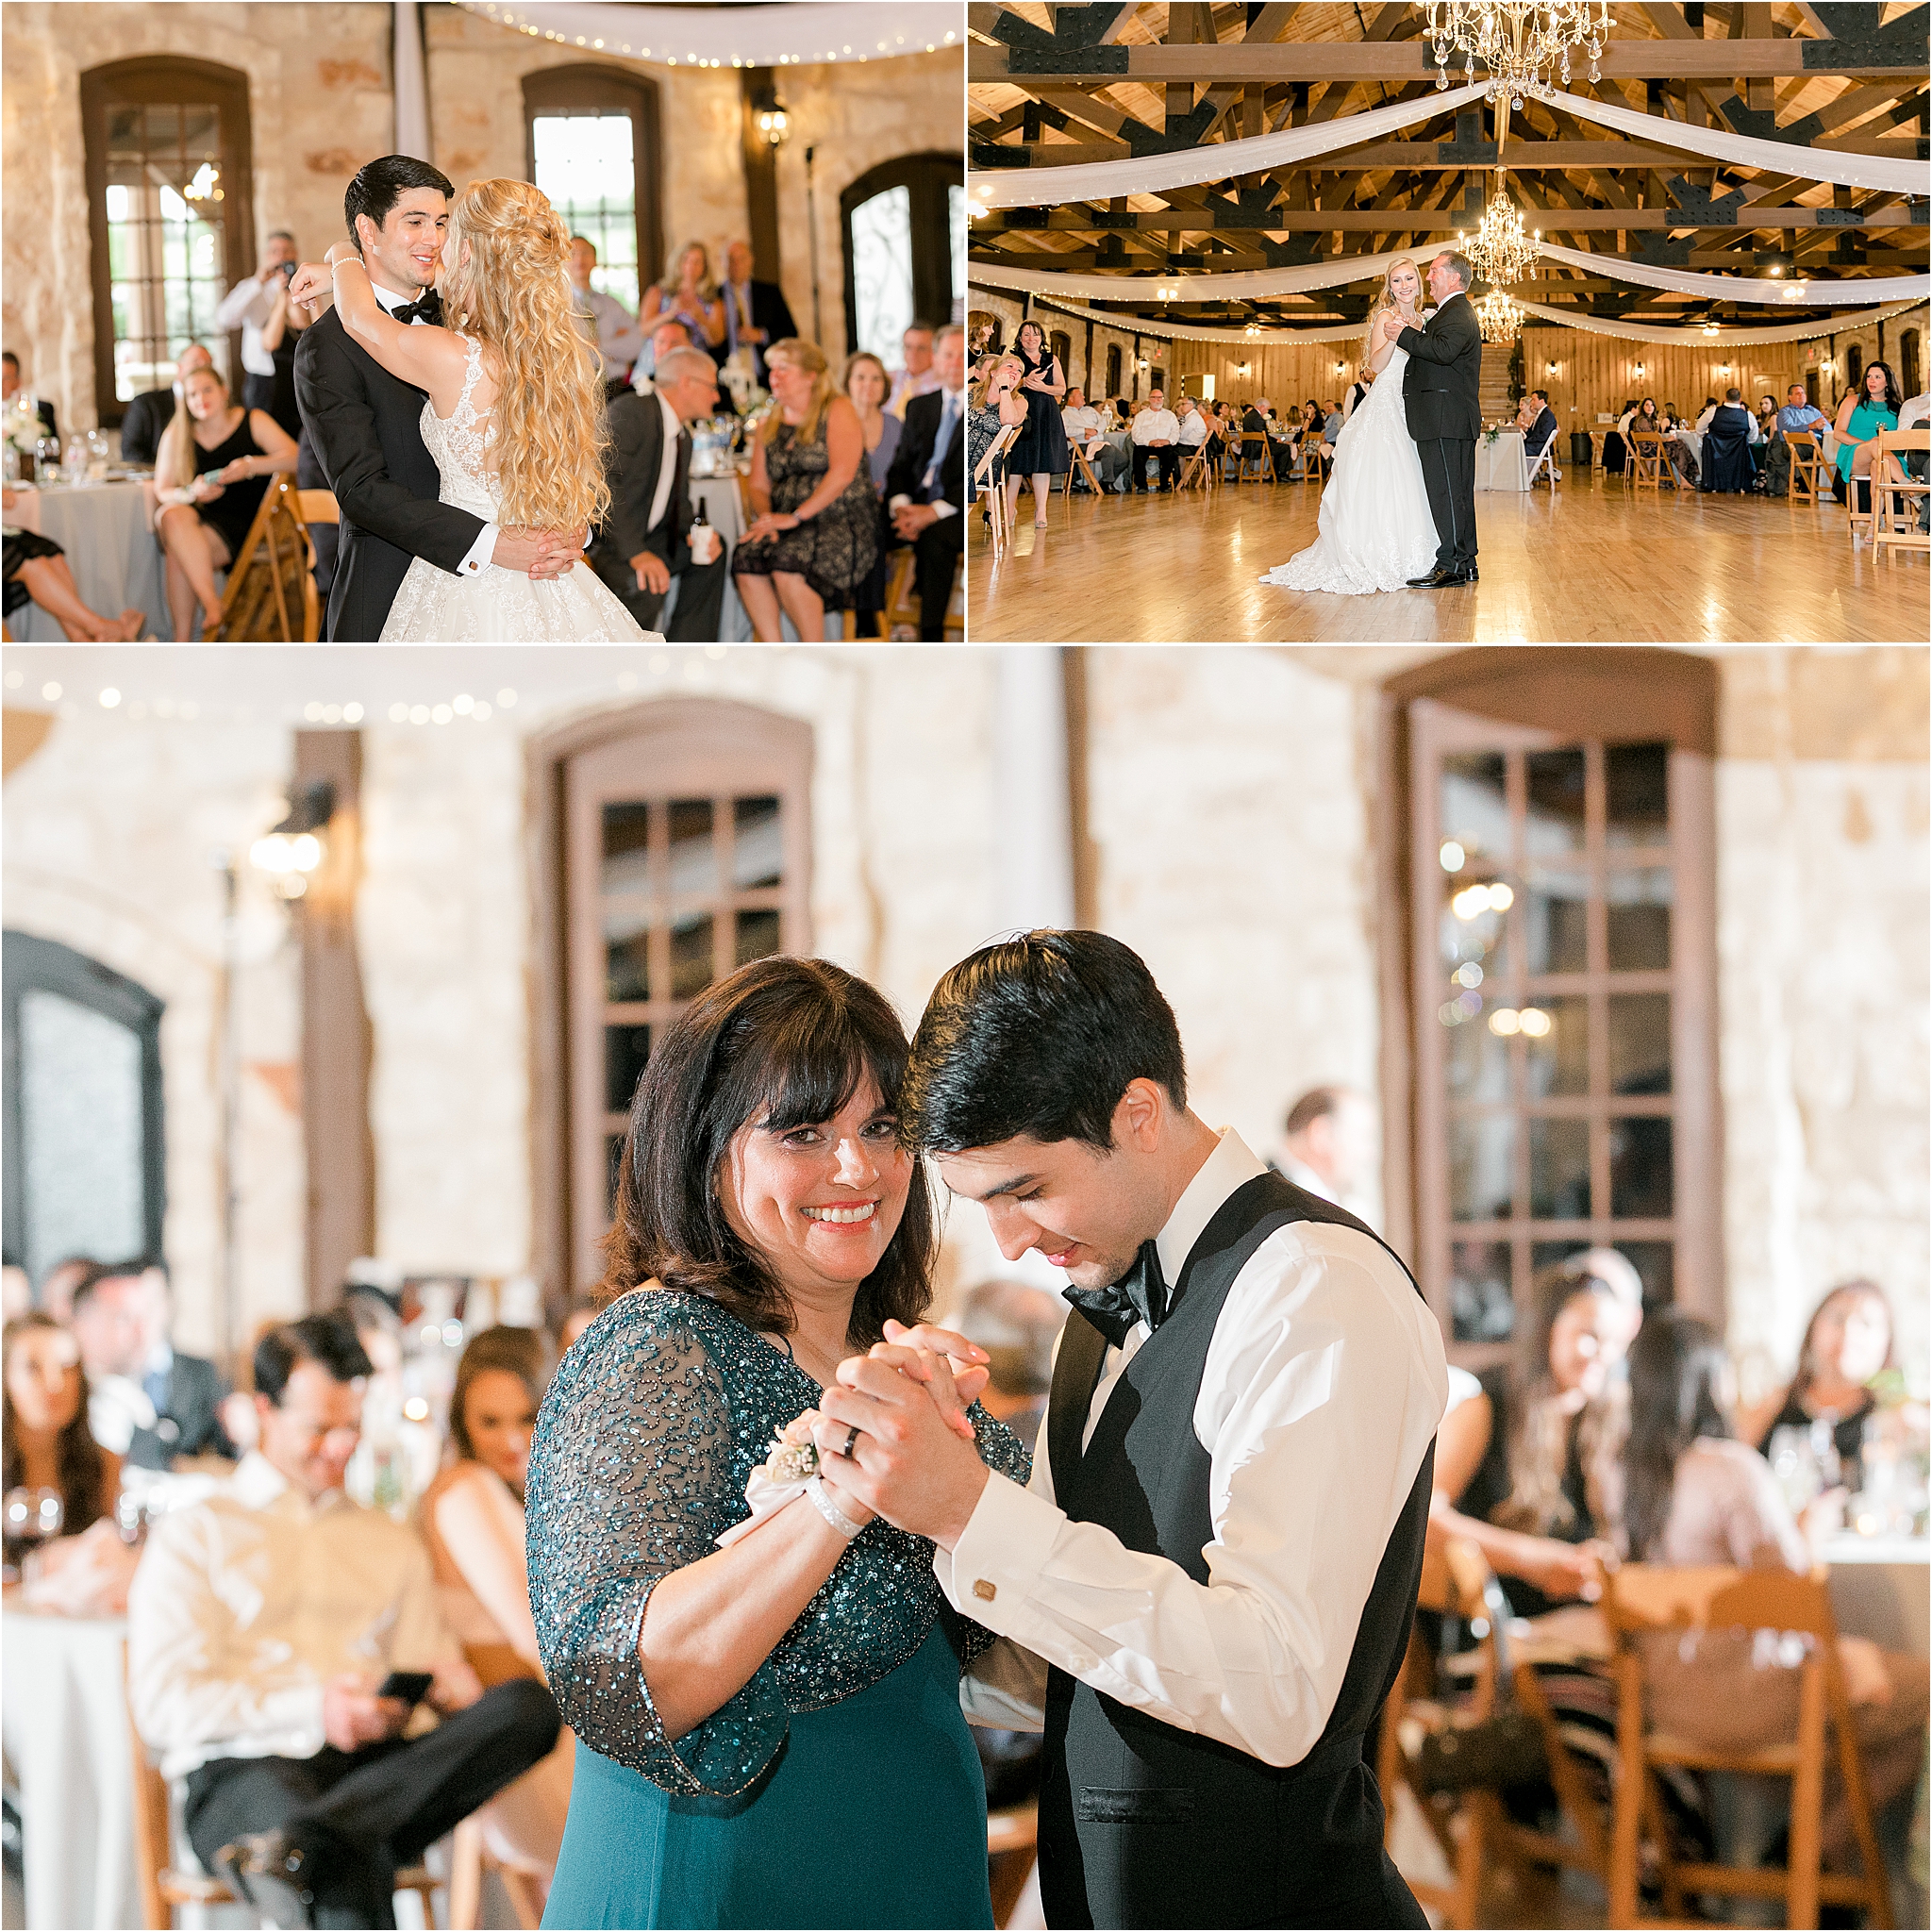 Dances at The Springs McKinney by DFW Wedding Photographer Jillian Hogan 